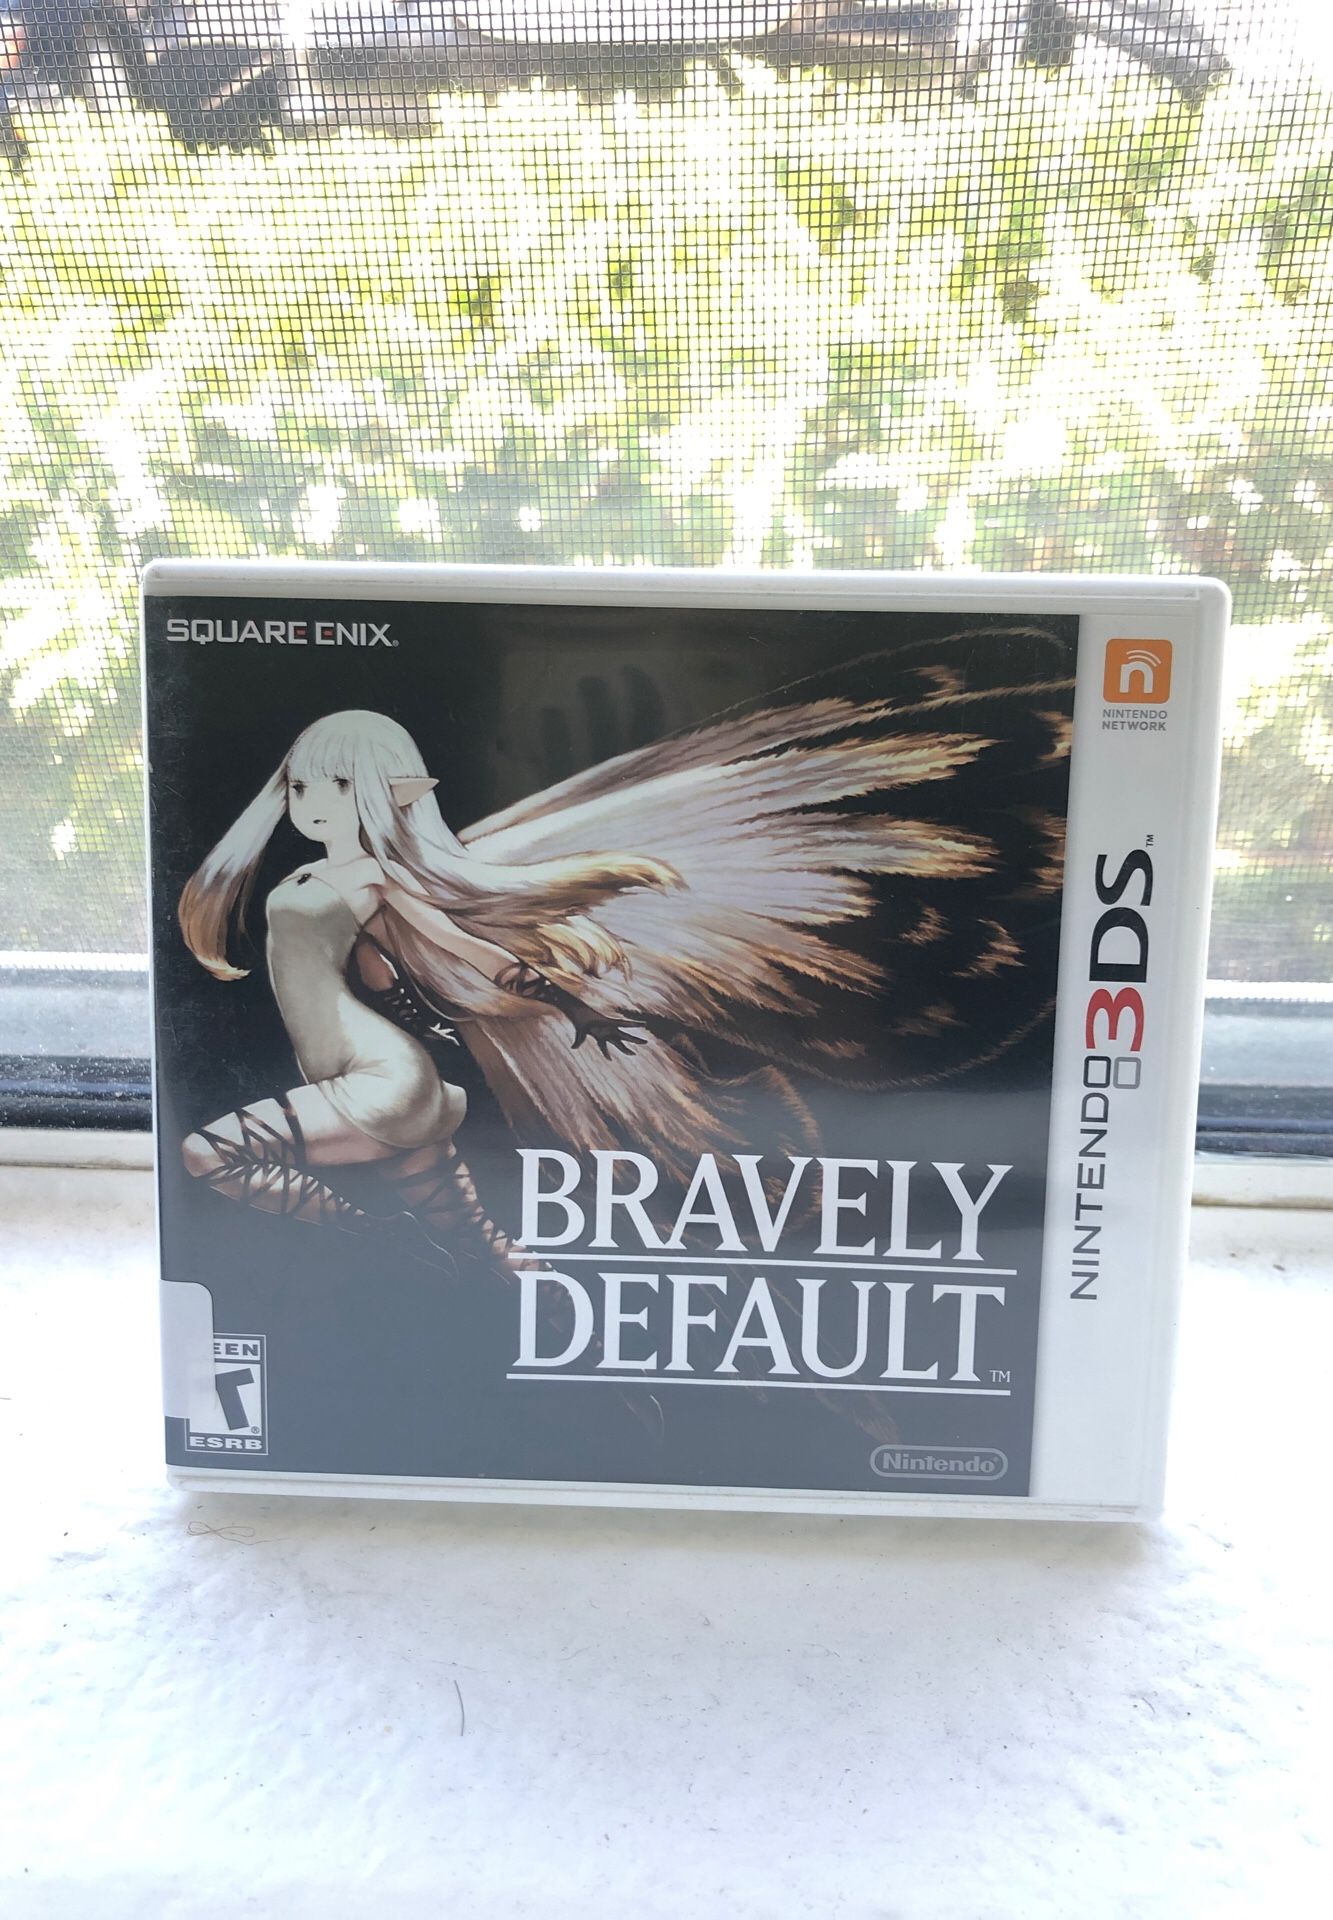 Nintendo 3DS Bravely Default